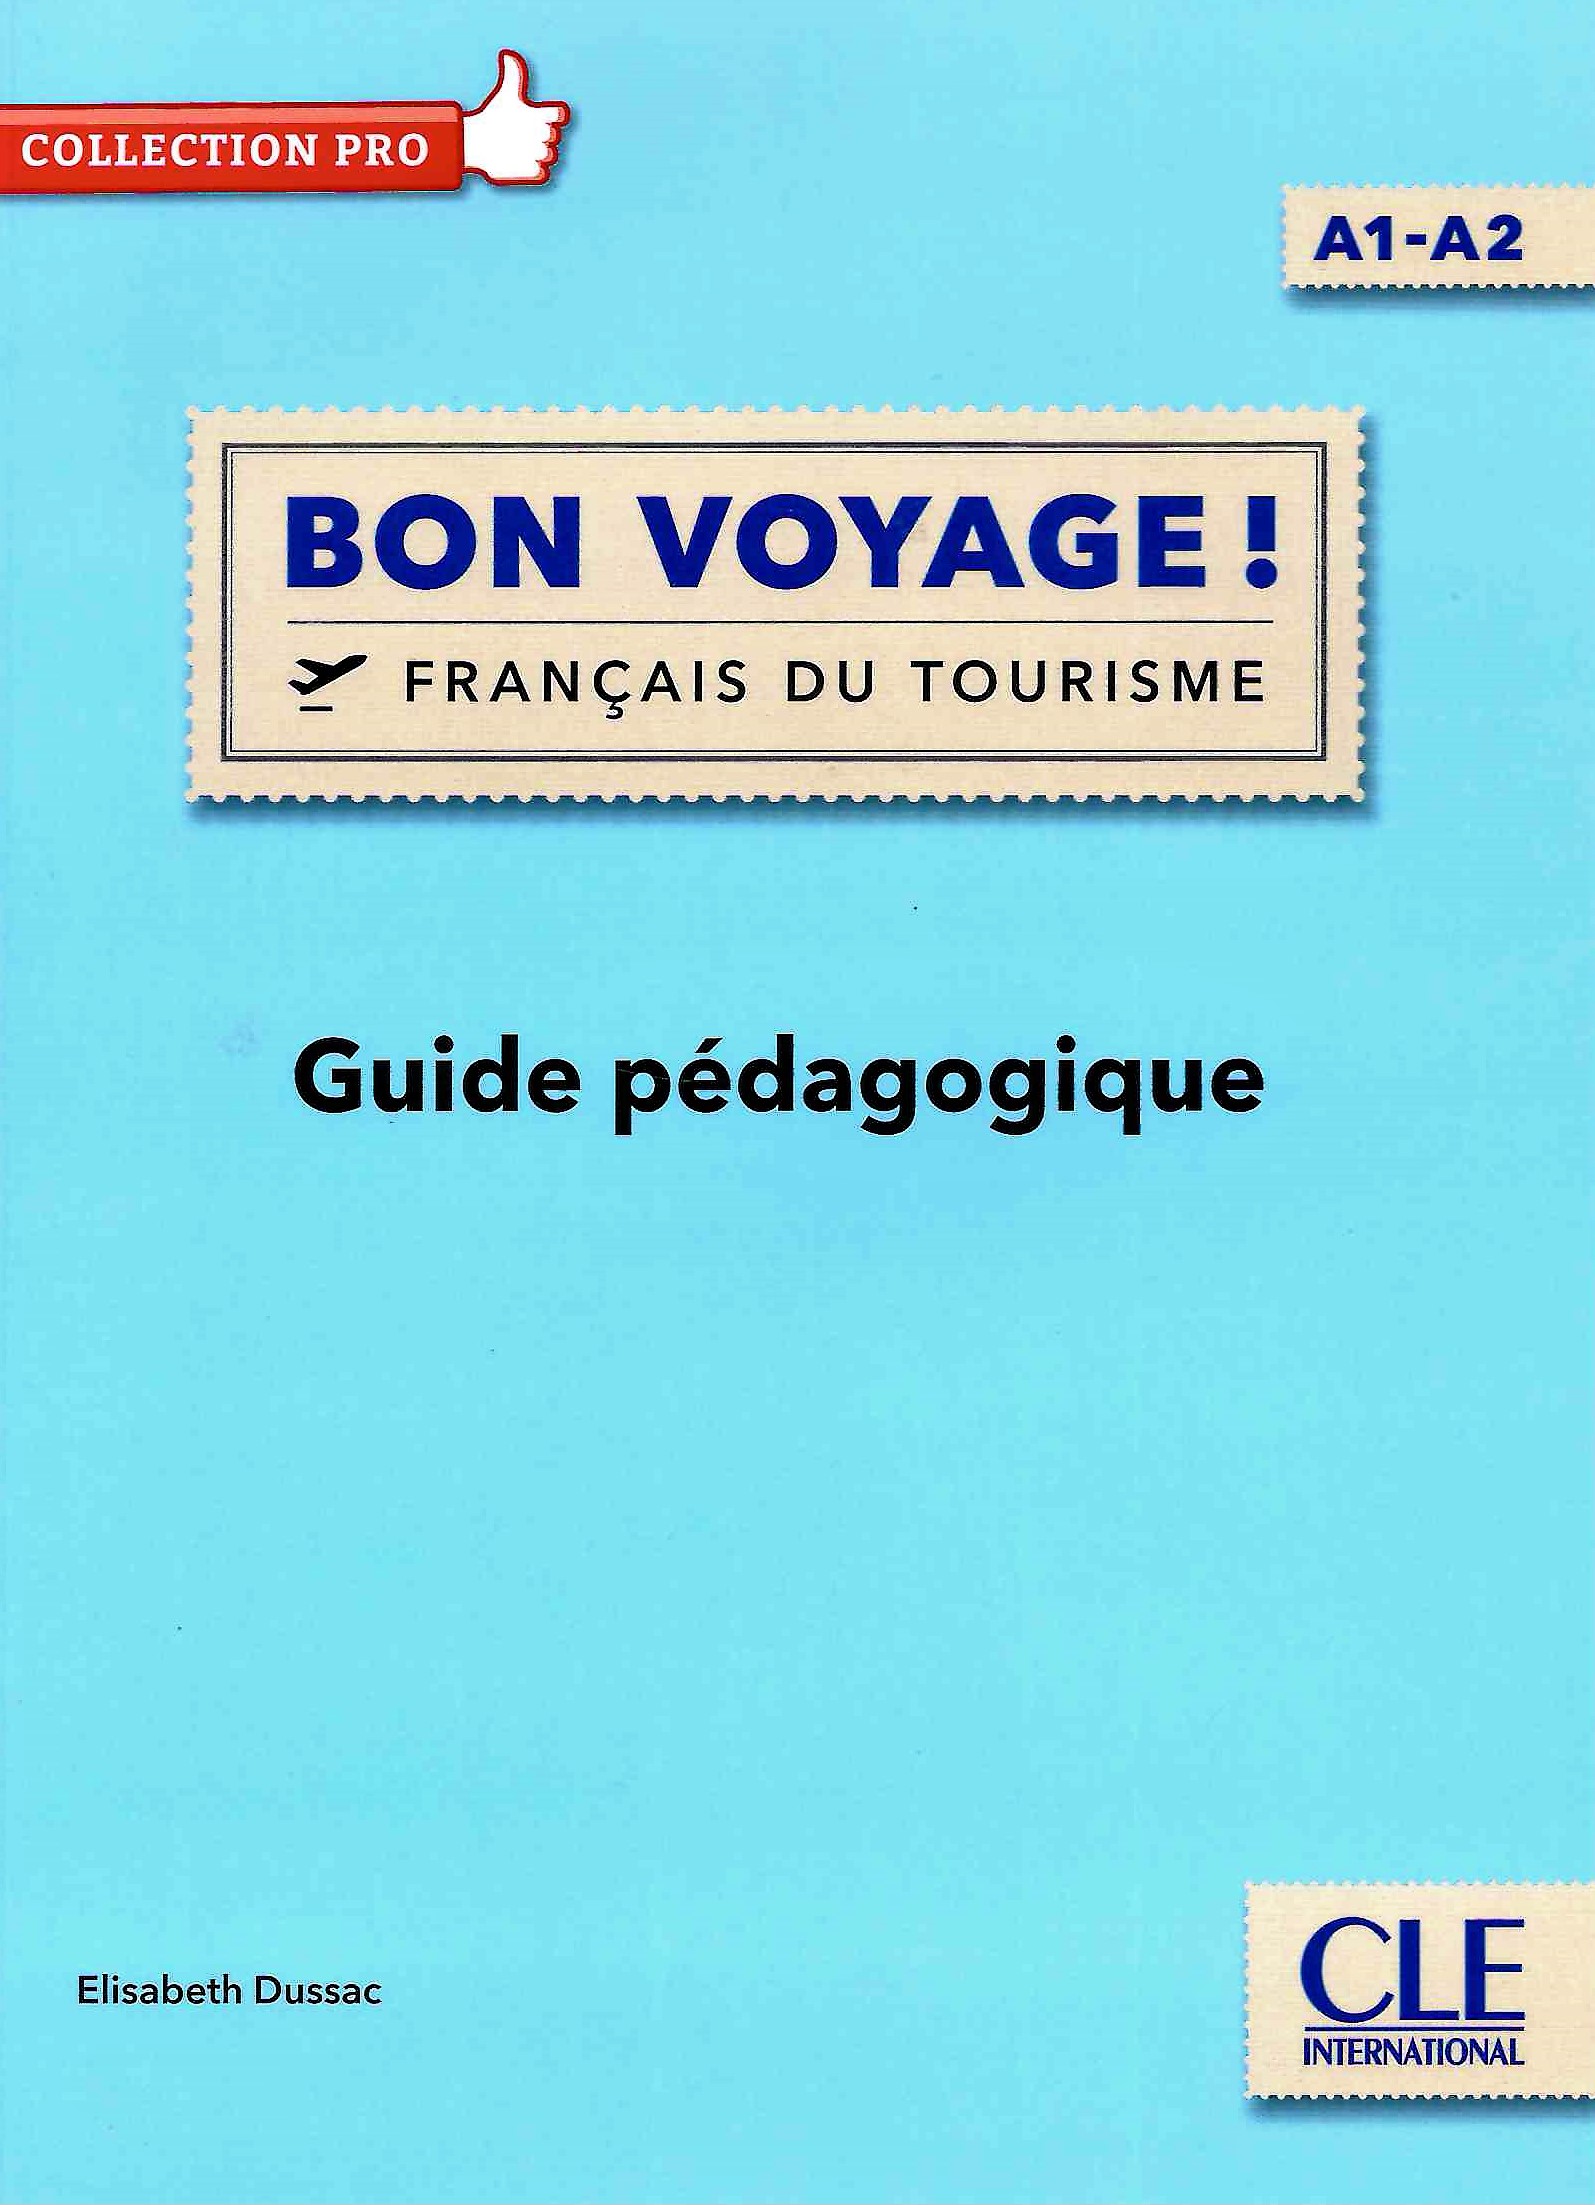 Bon voyage! A1-A2 Guide pedagogique / Книга для учителя